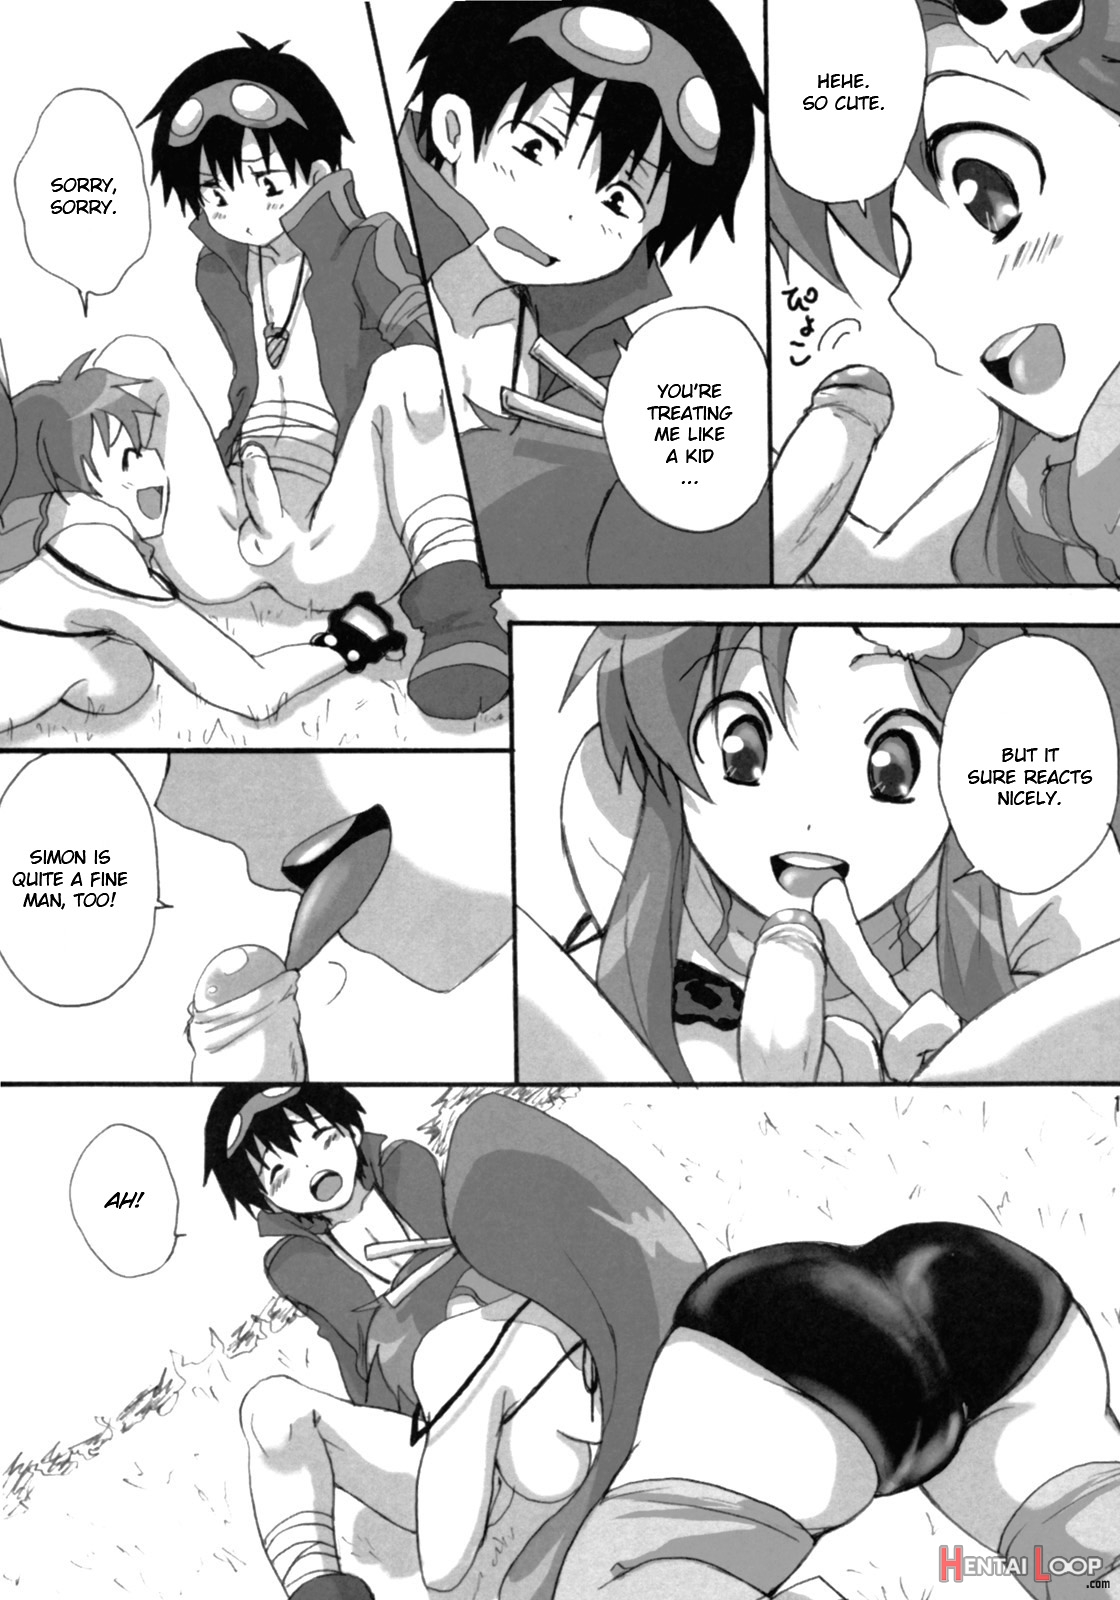 Yoko And Simon's Feelings page 14